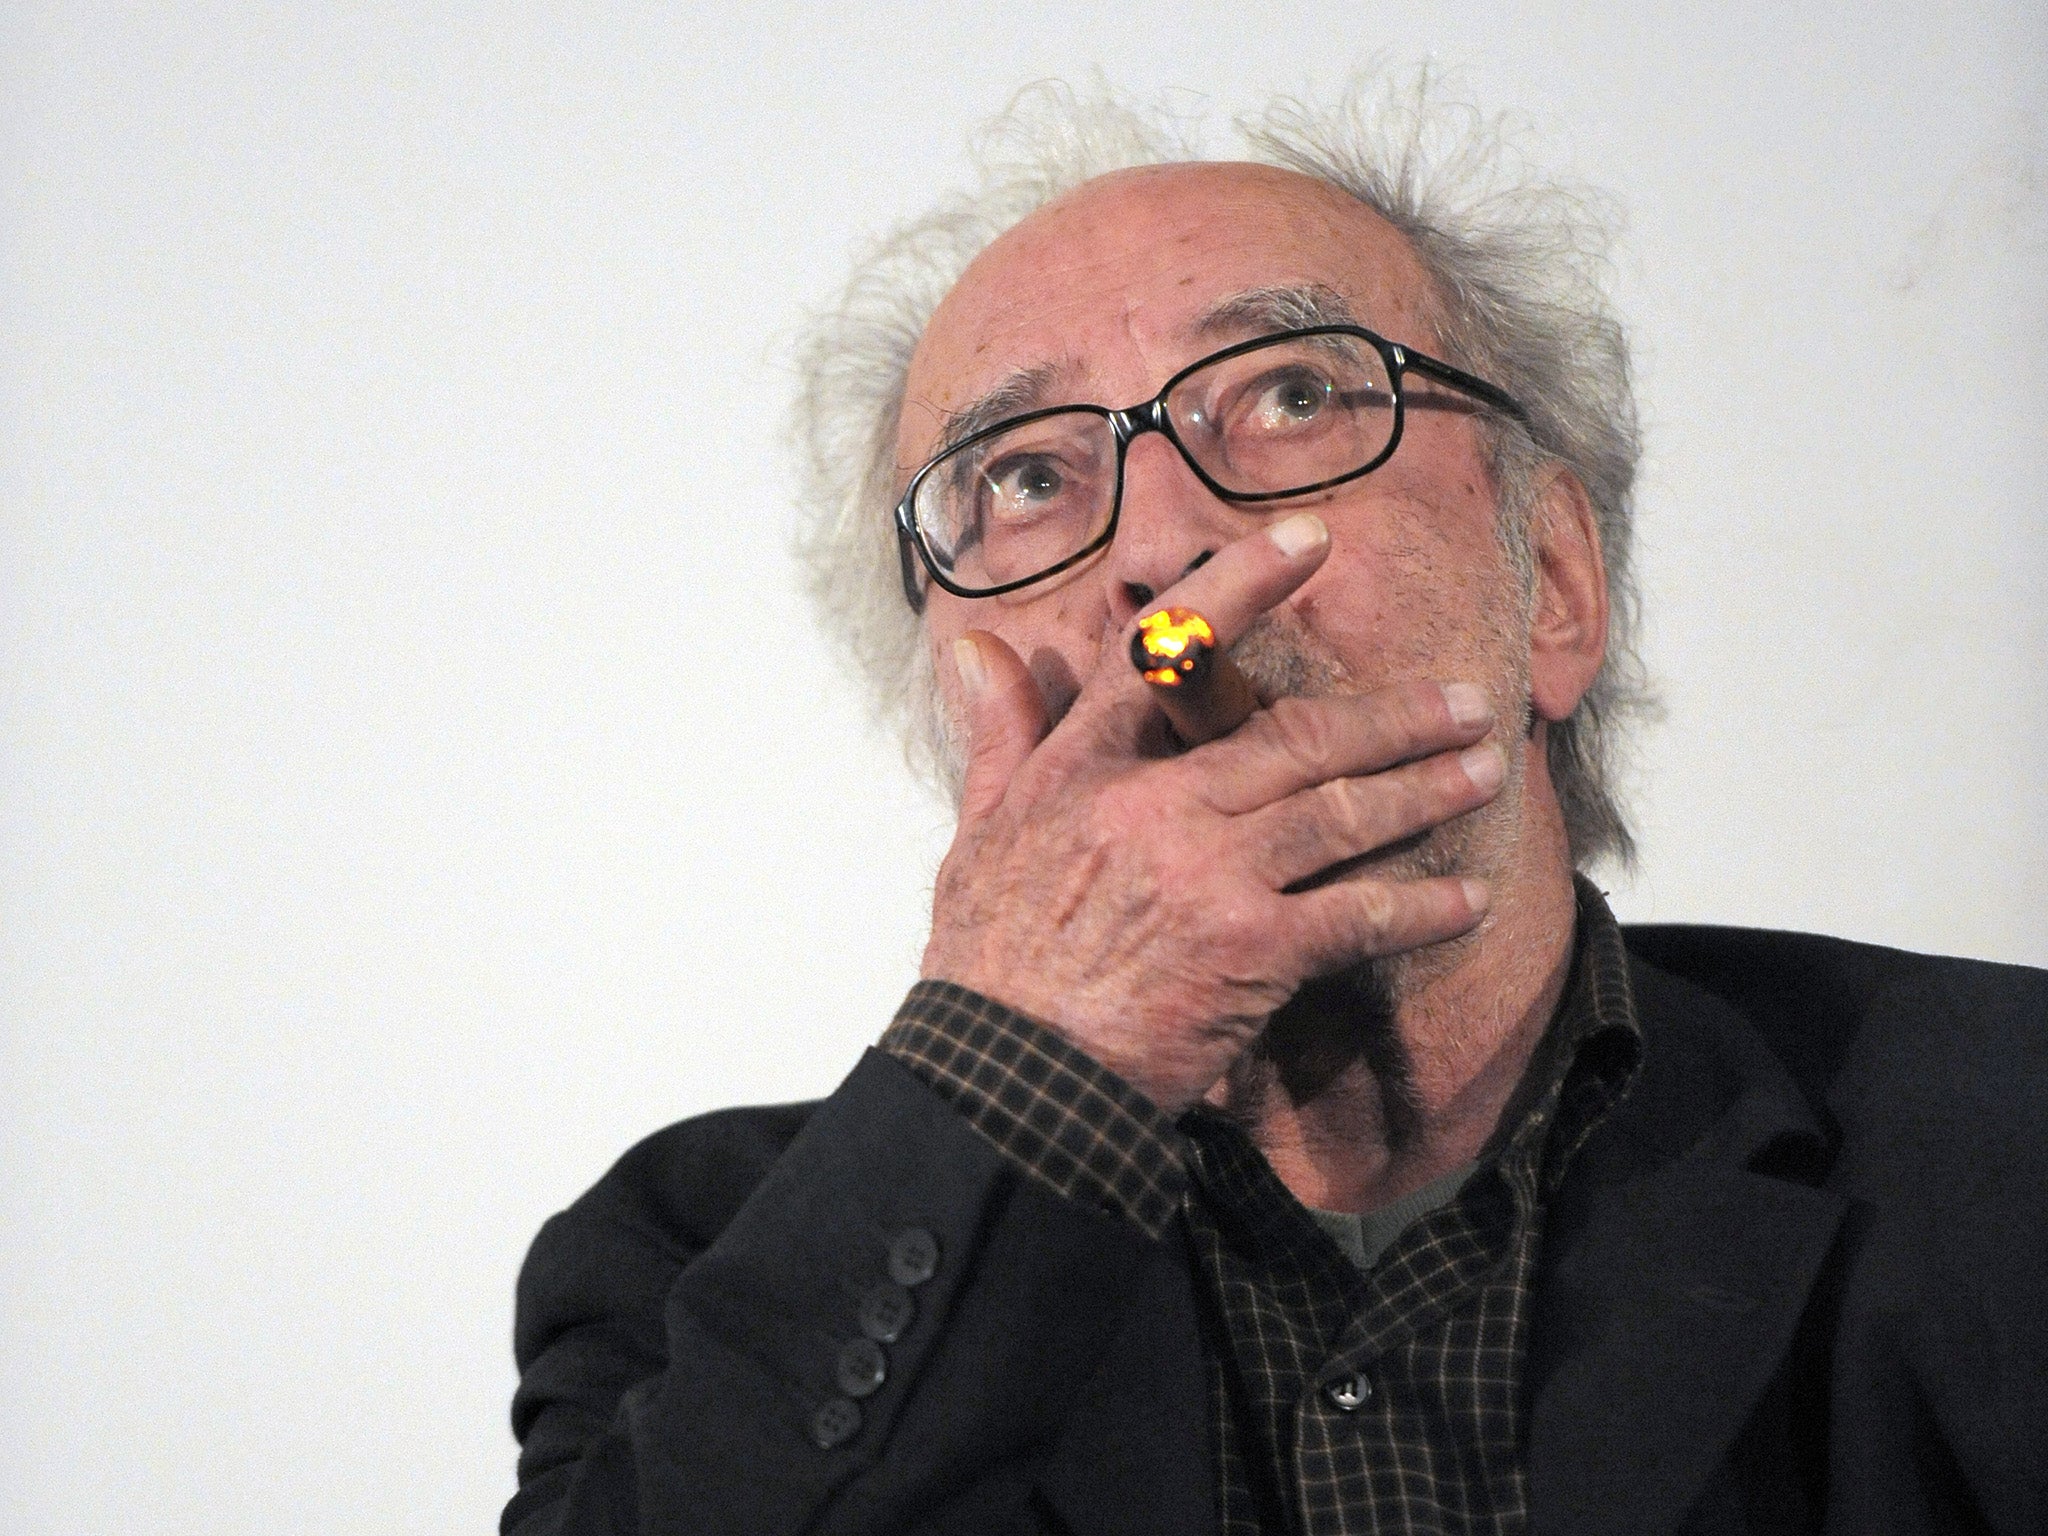 The film’s director, Jean-Luc Godard